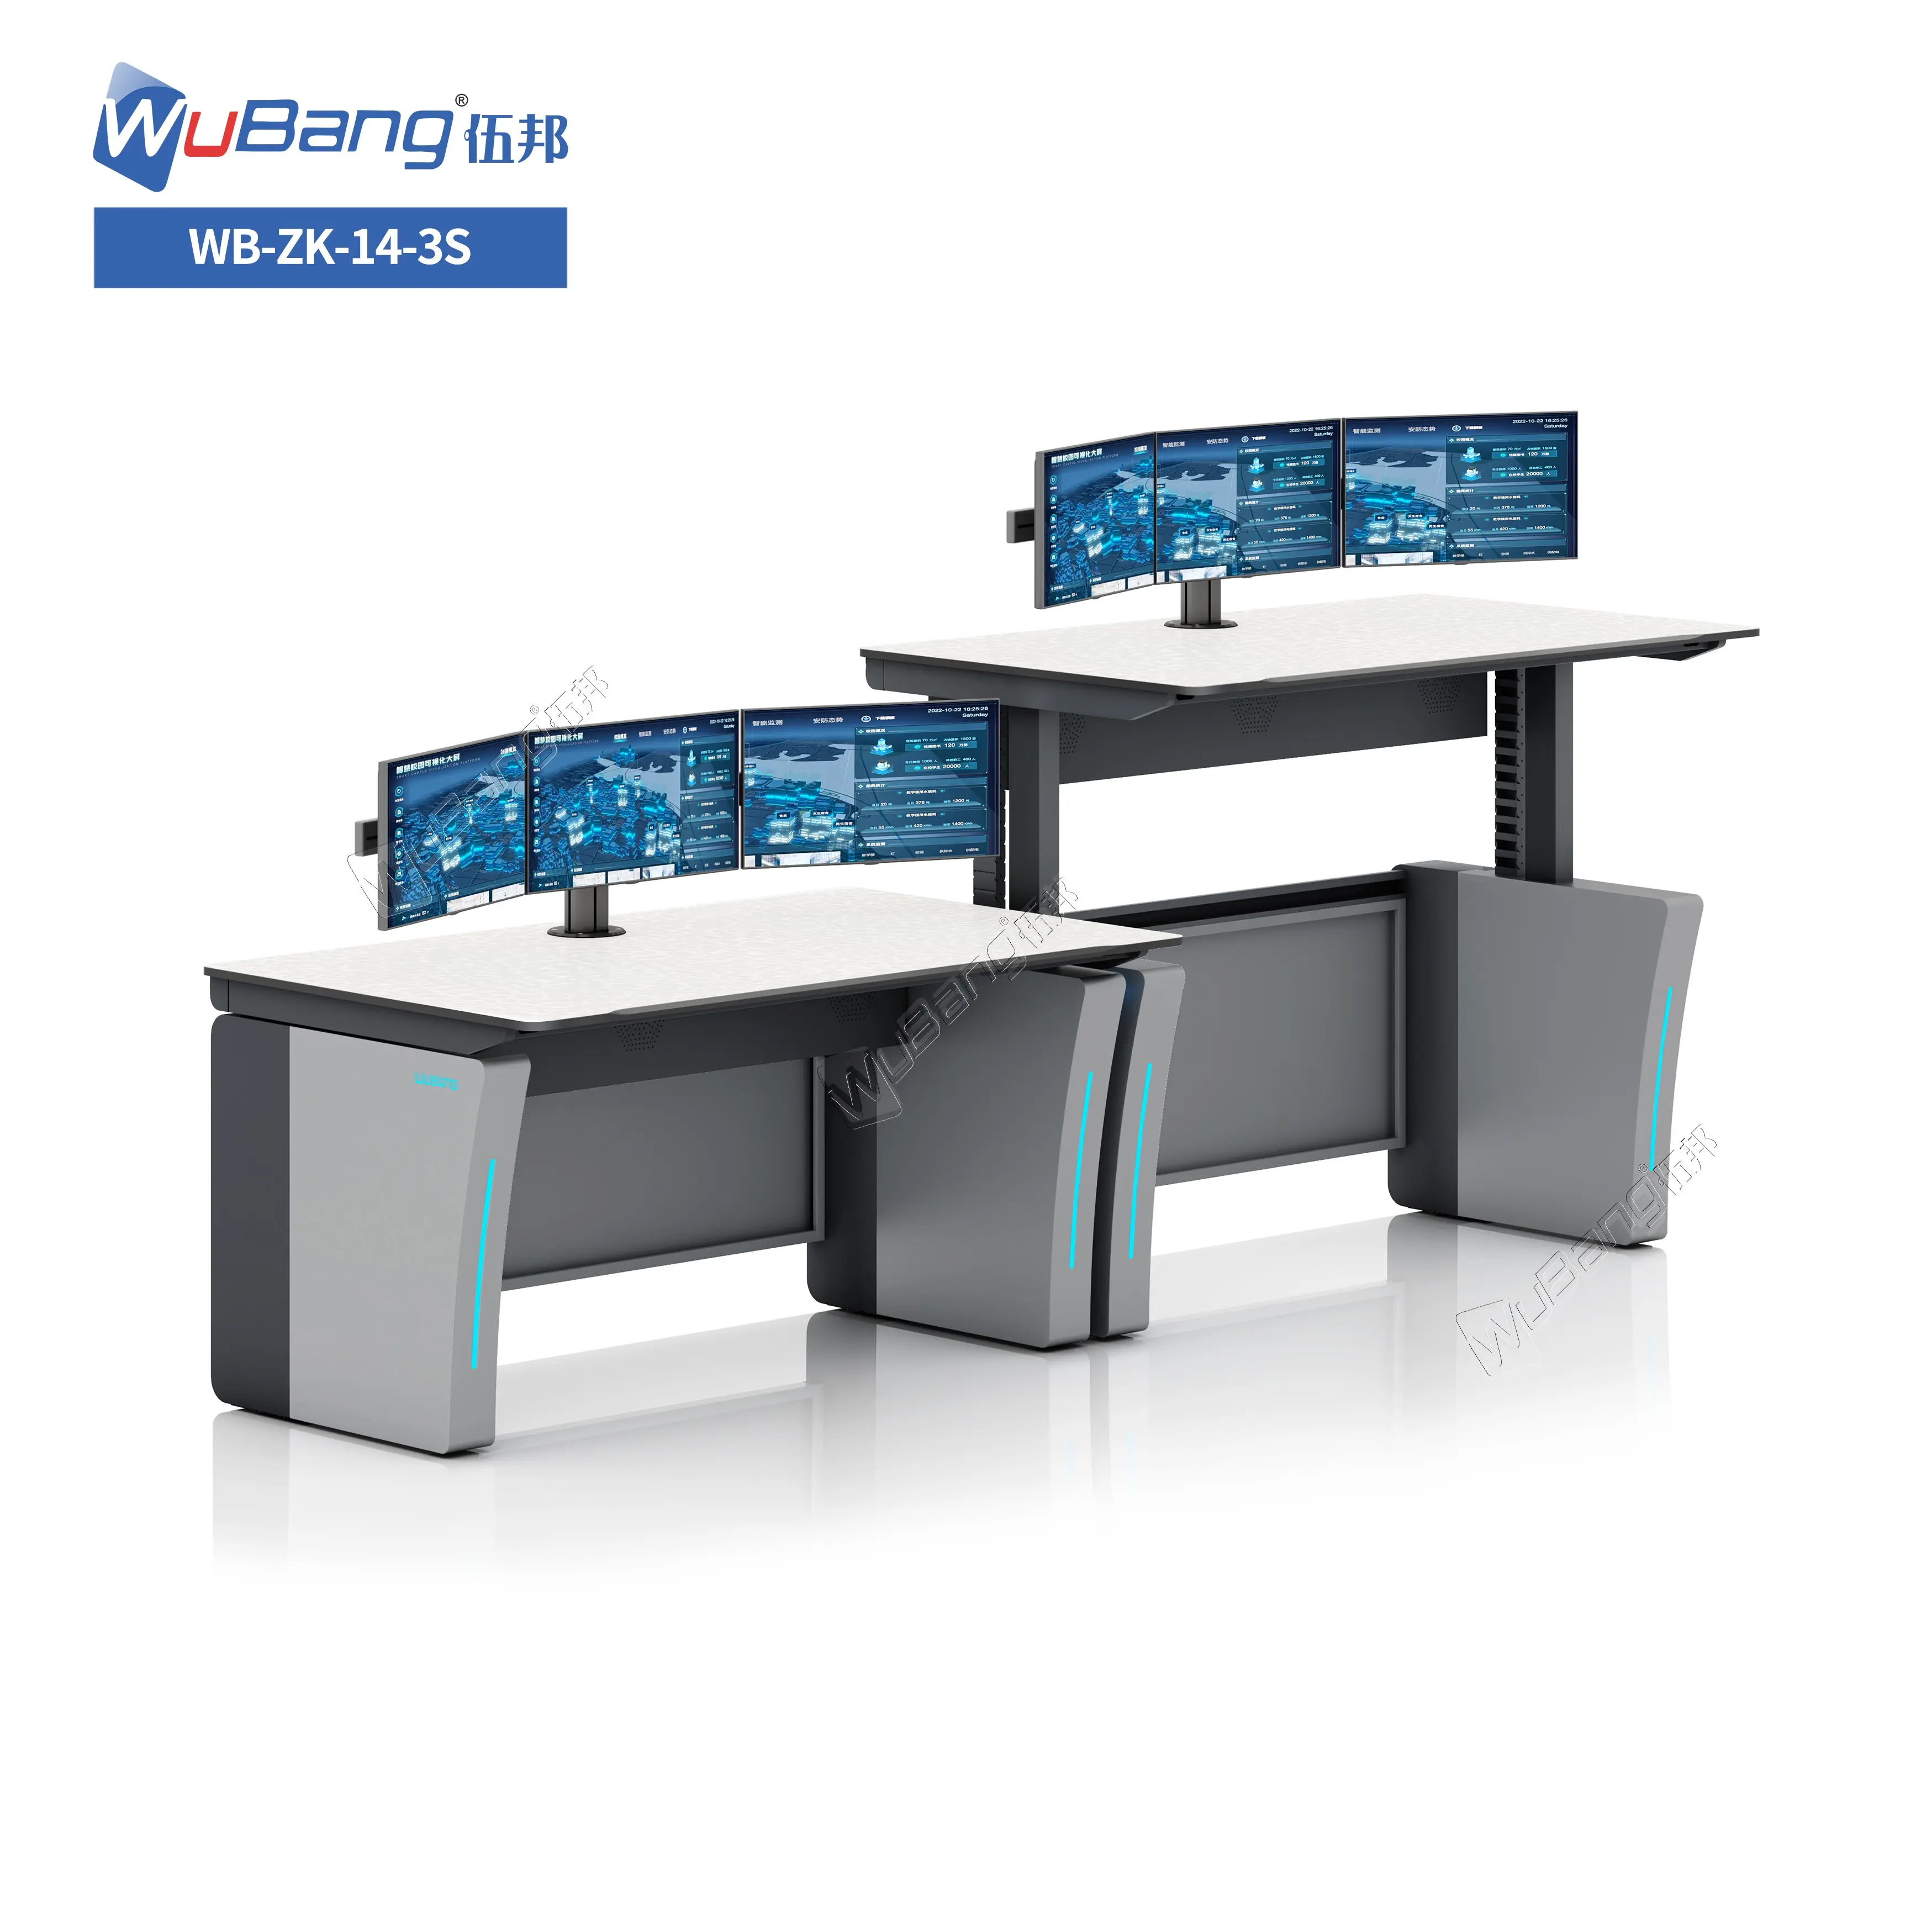 Monitor de 27 '', consola de pie de doble motor, sala de monitor, consola de despacho, estación de trabajo, mesas de sala de control